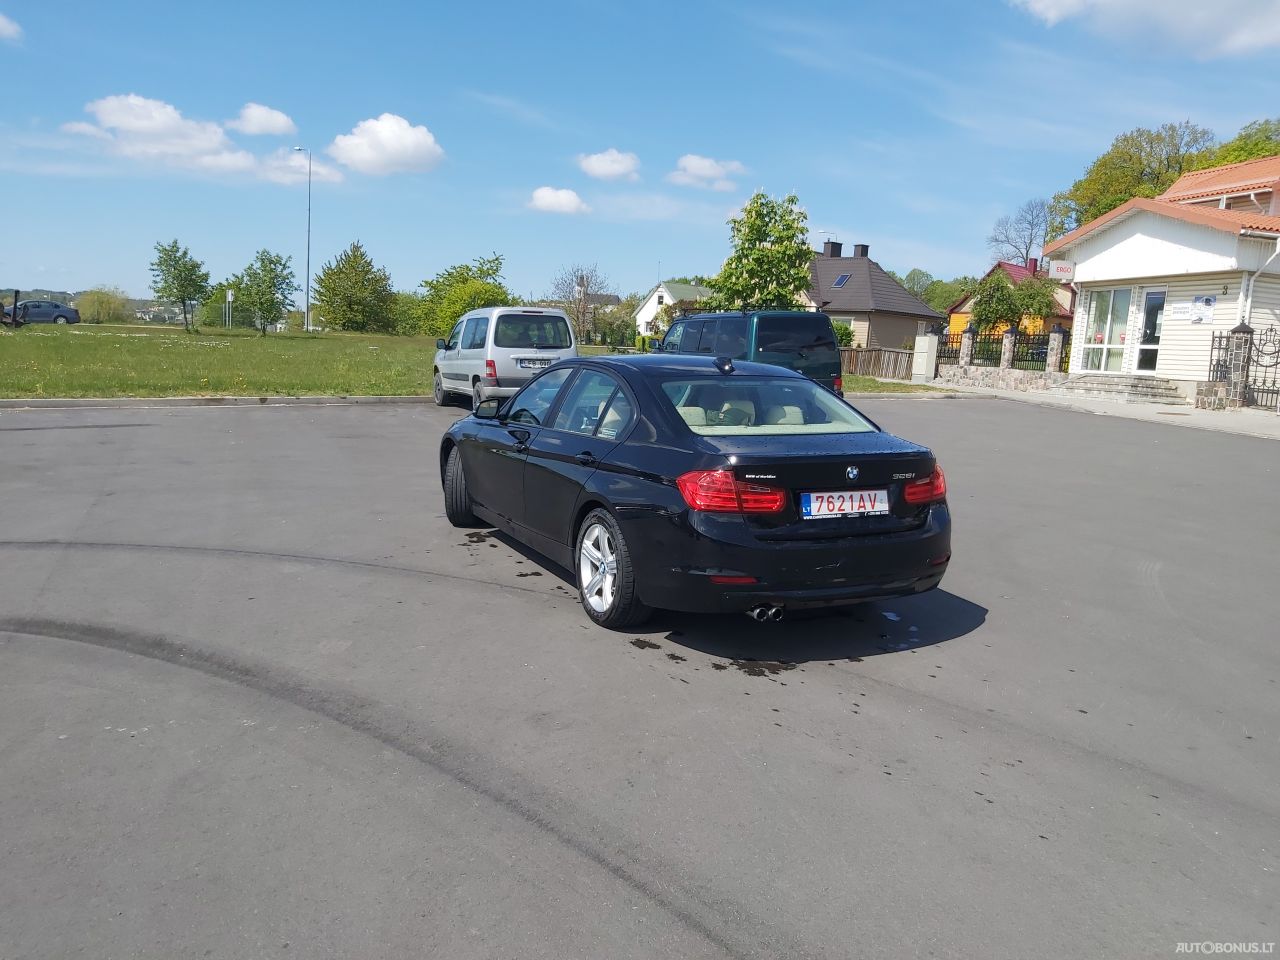 BMW 328, 2.8 l., saloon